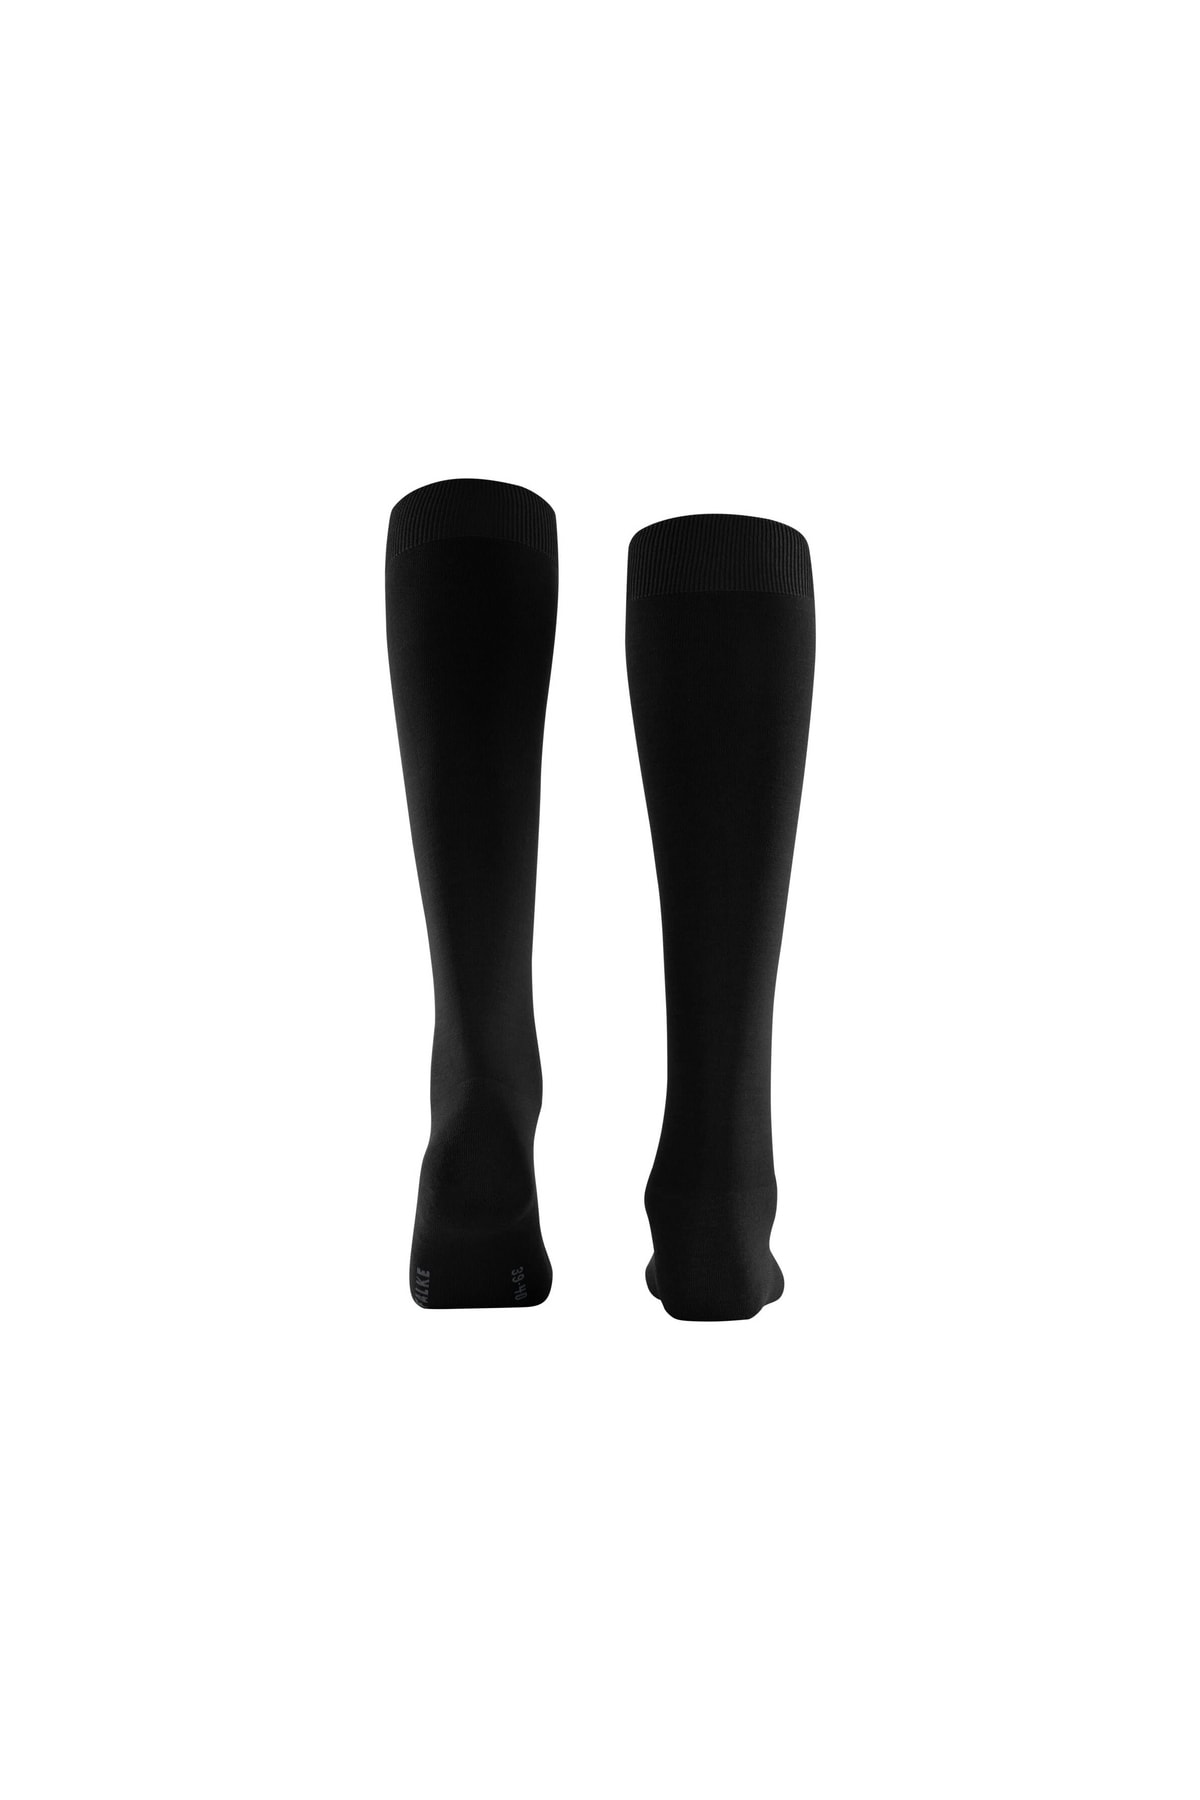 FALKE Socken Schwarz Casual für Damen - 39-40 Hersteller: Falke Bestellnummer: